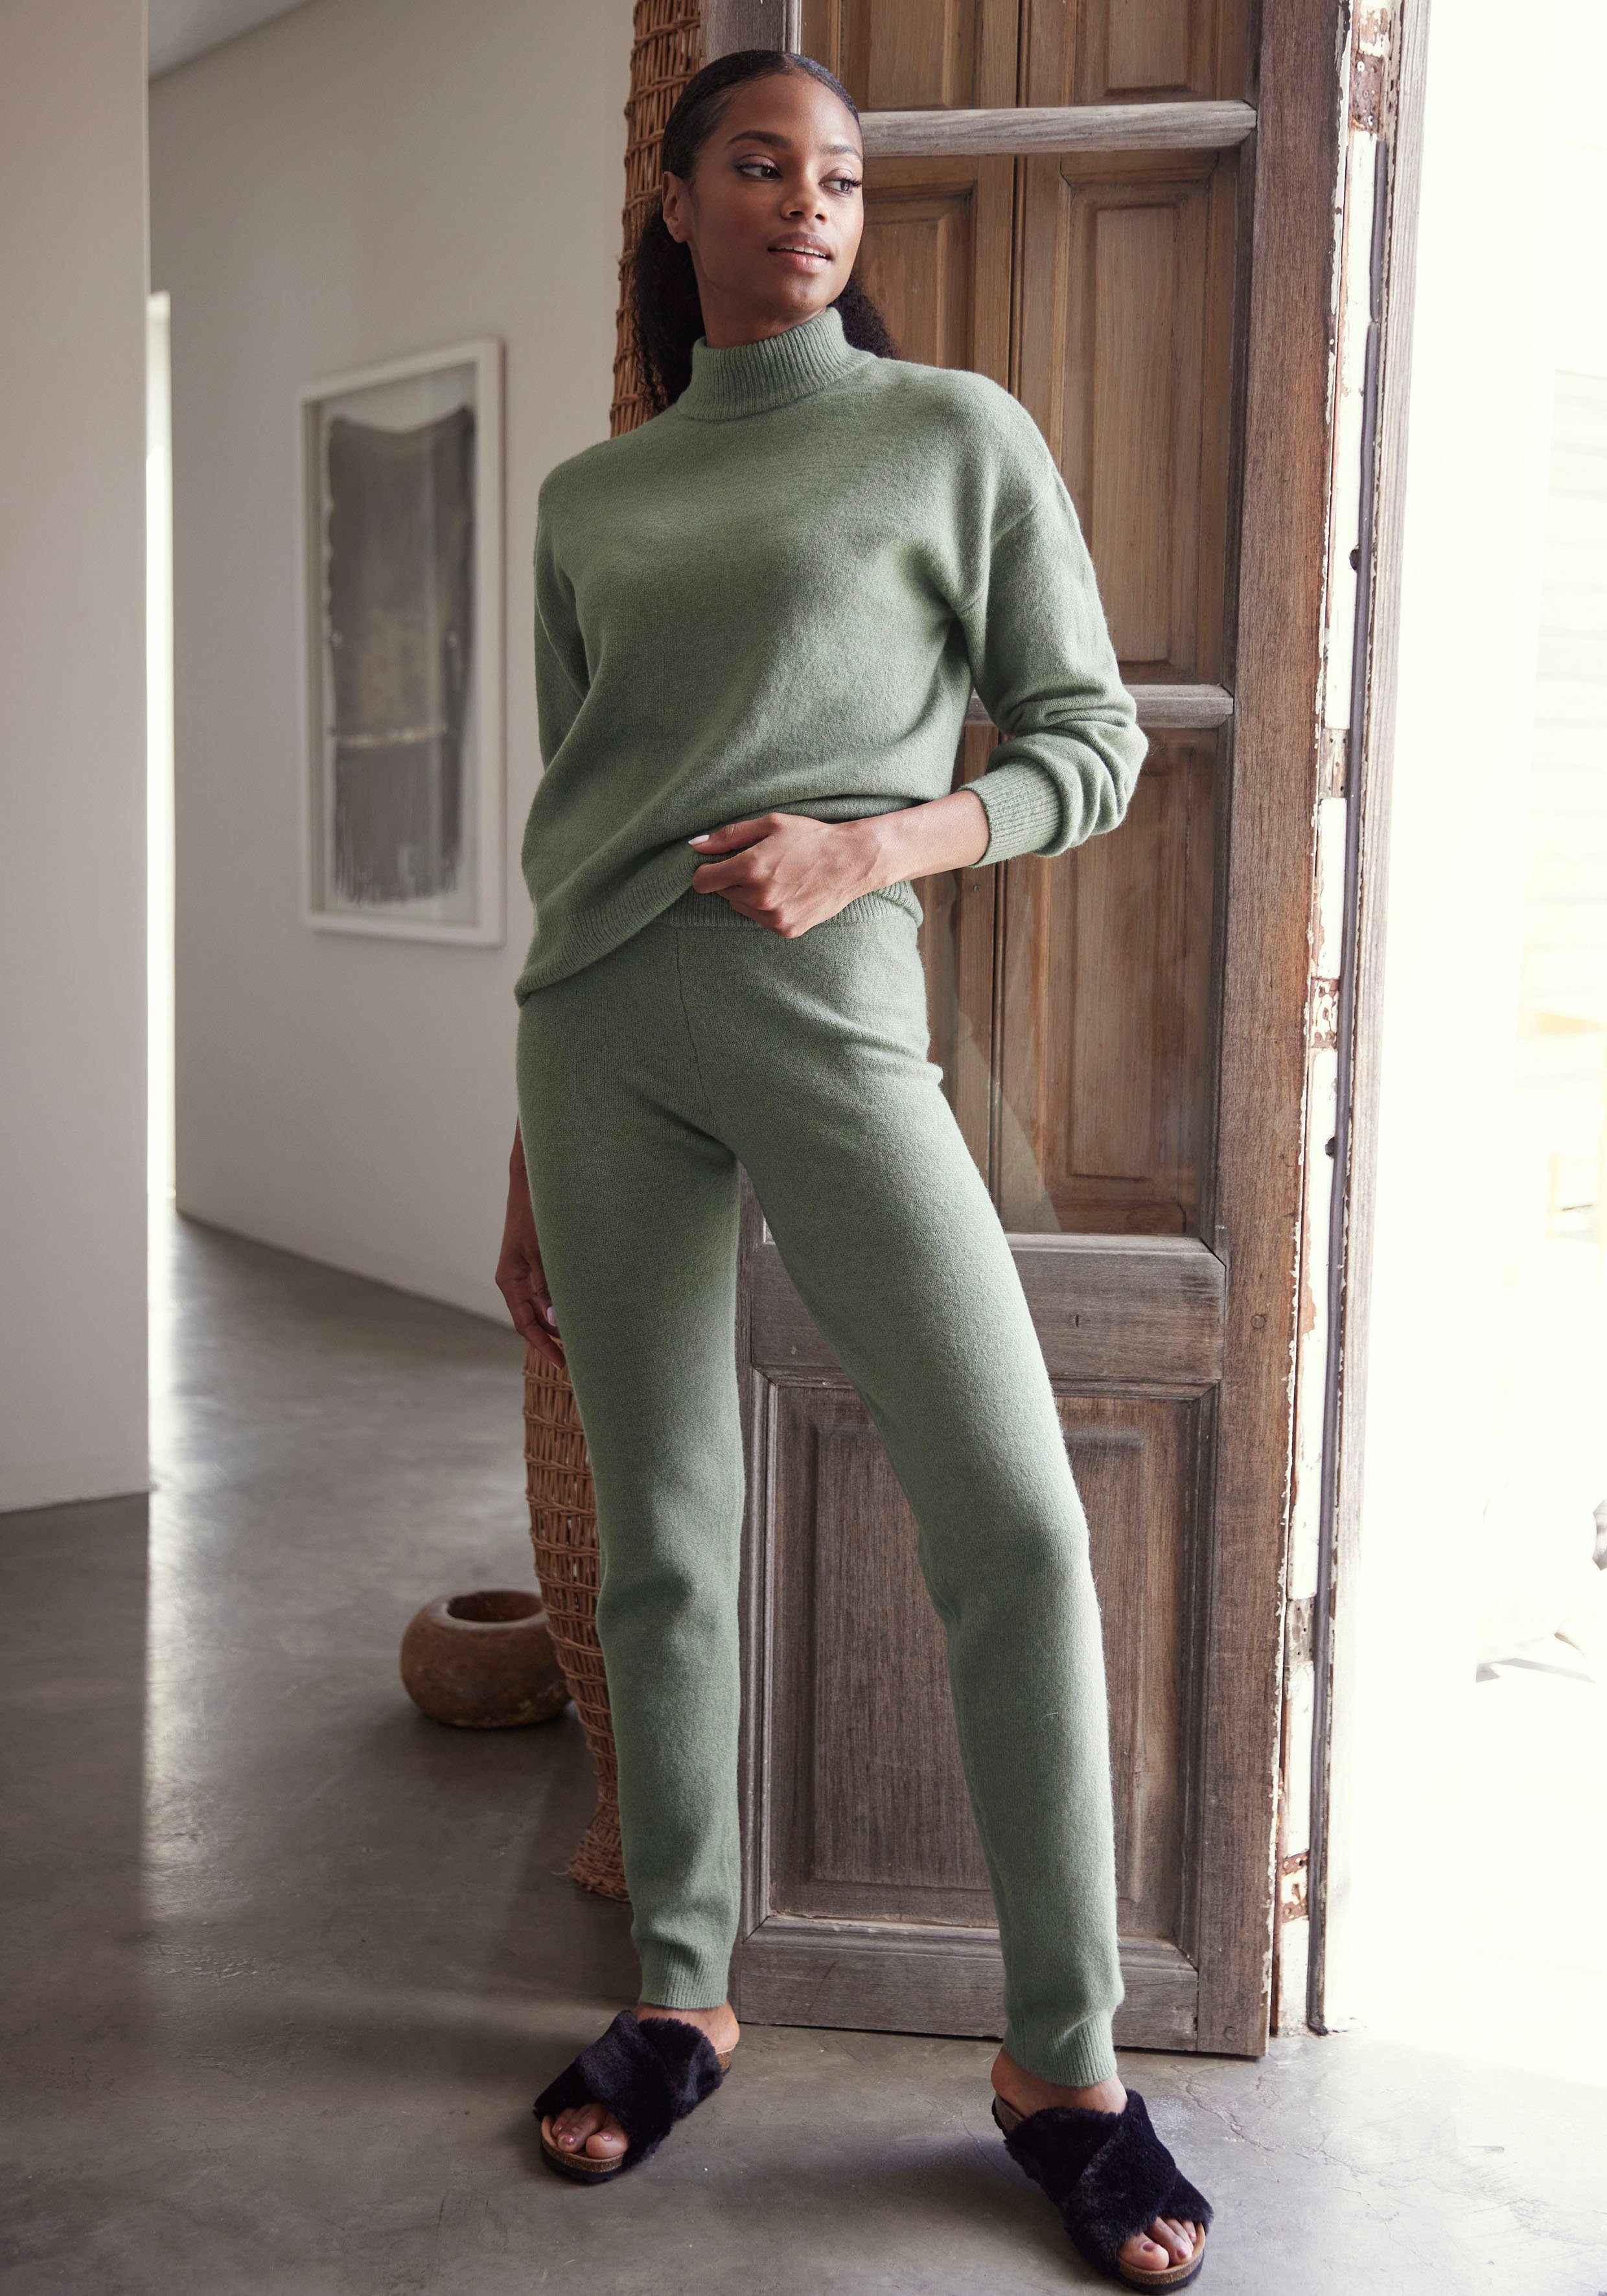 LASCANA Strickhose grün Loungewear -Loungehose Strick, aus weichem